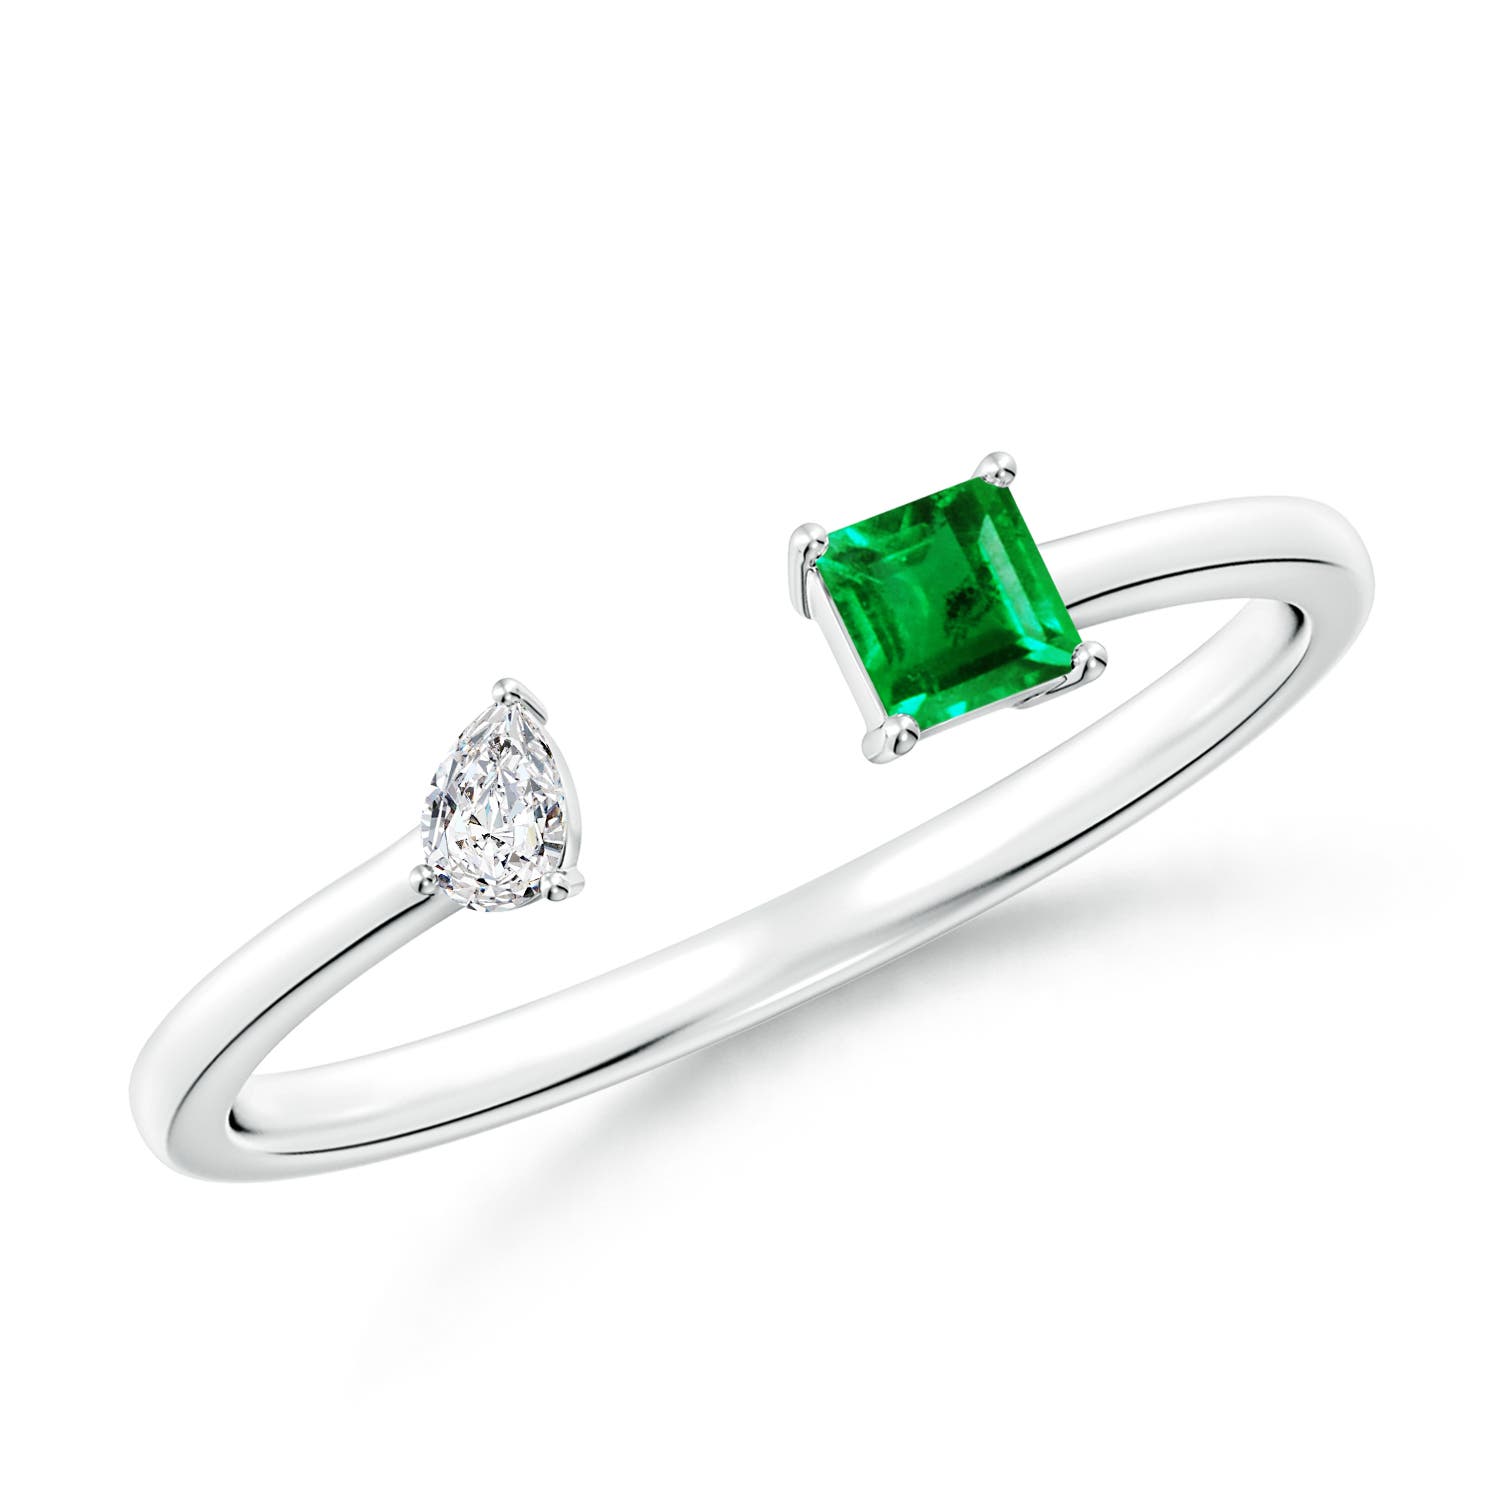 American Diamond Ring | American Diamond Ring Price | Saaj